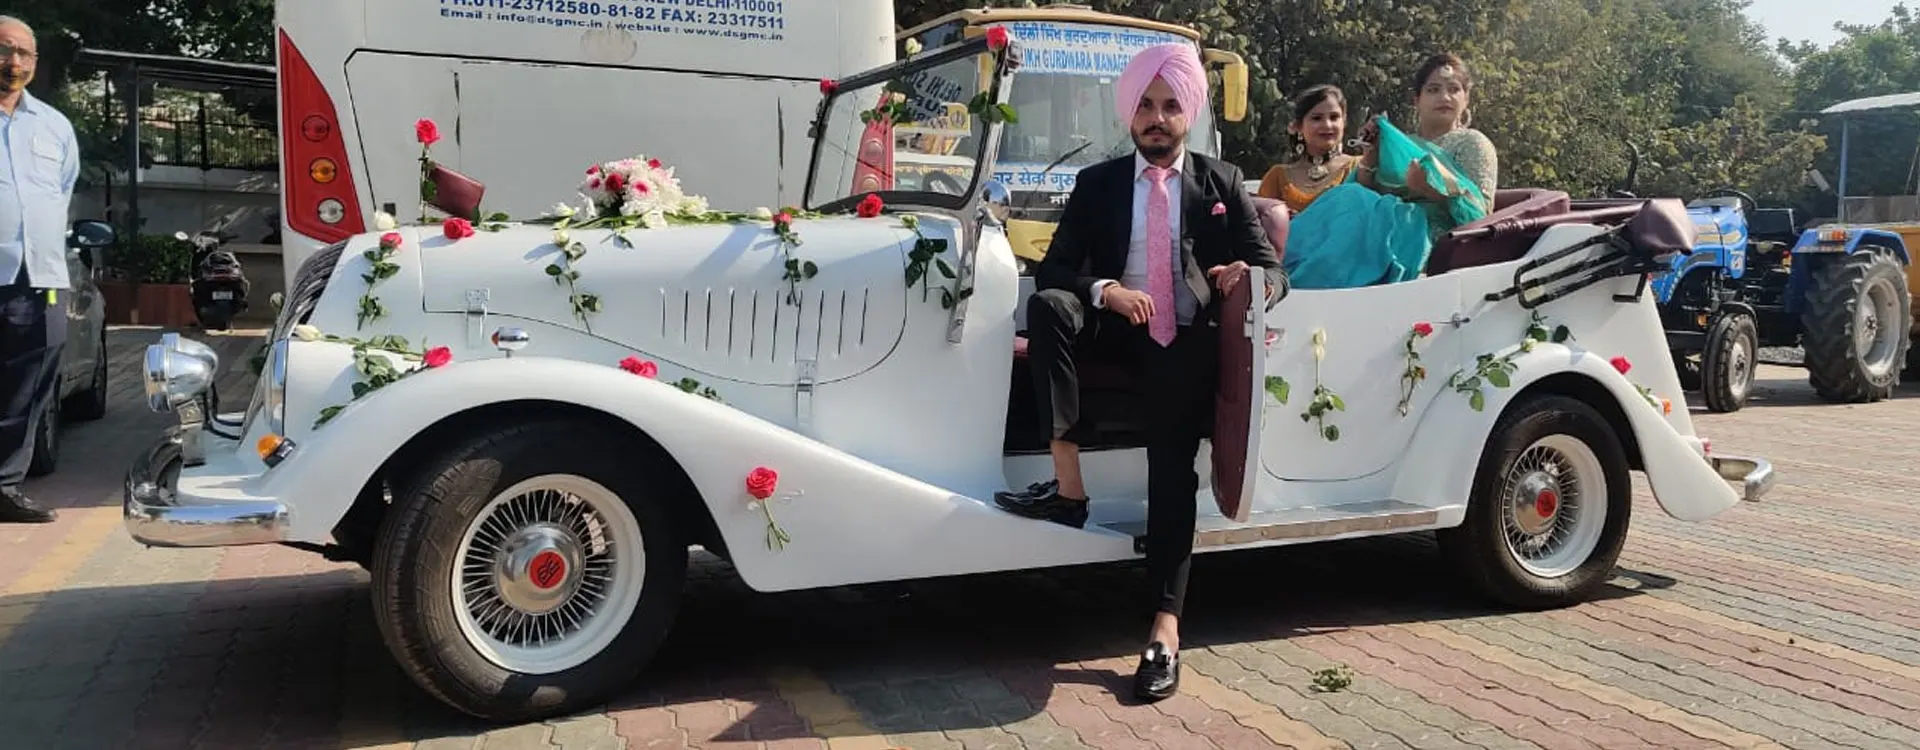 Vintage Car Service For Wedding in Delhi NCR